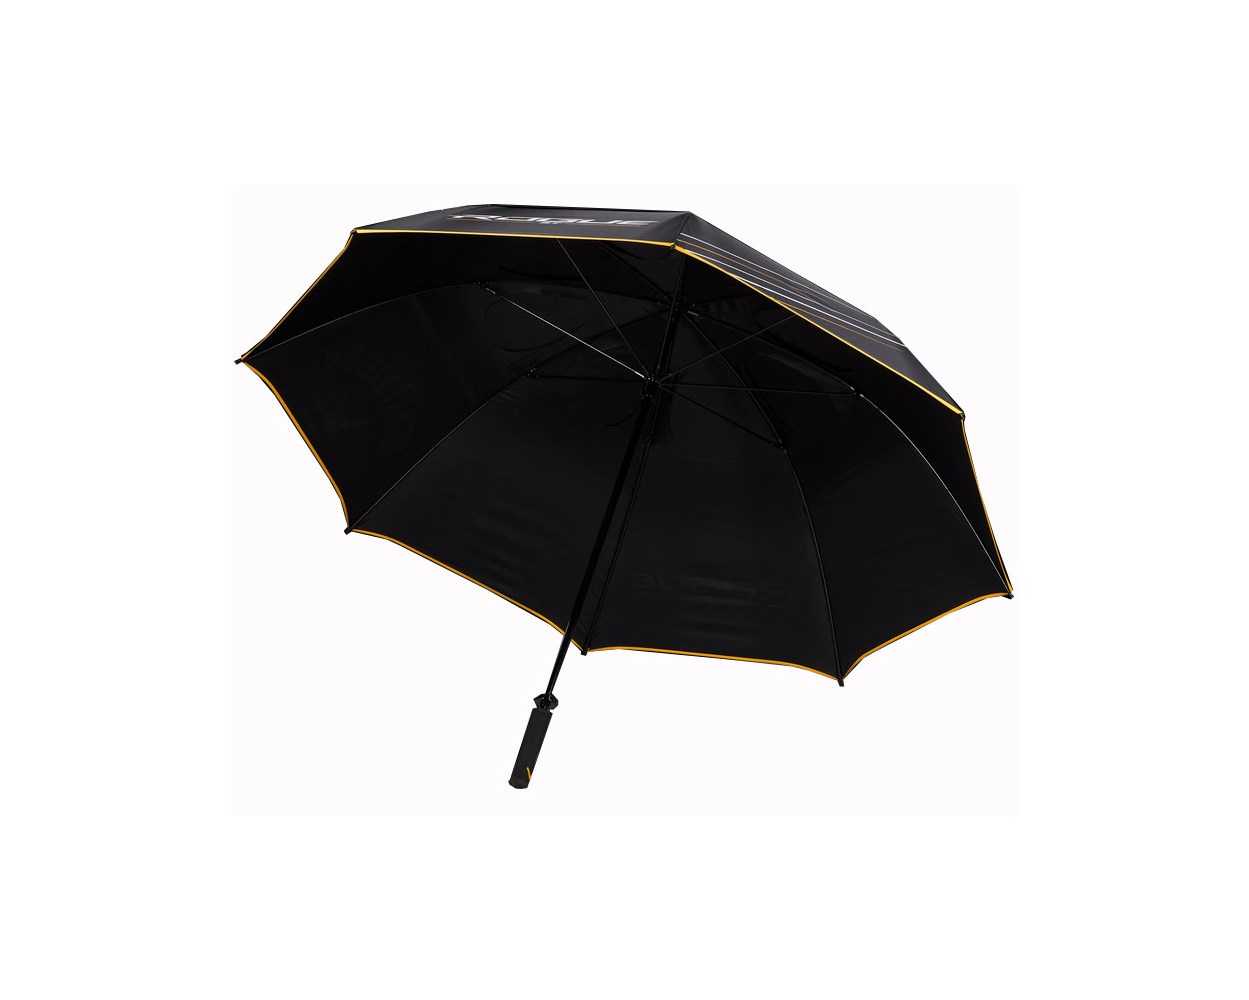 Callaway Rogue ST 64 Inch Double Canopy deštník - zvìtšit obrázek